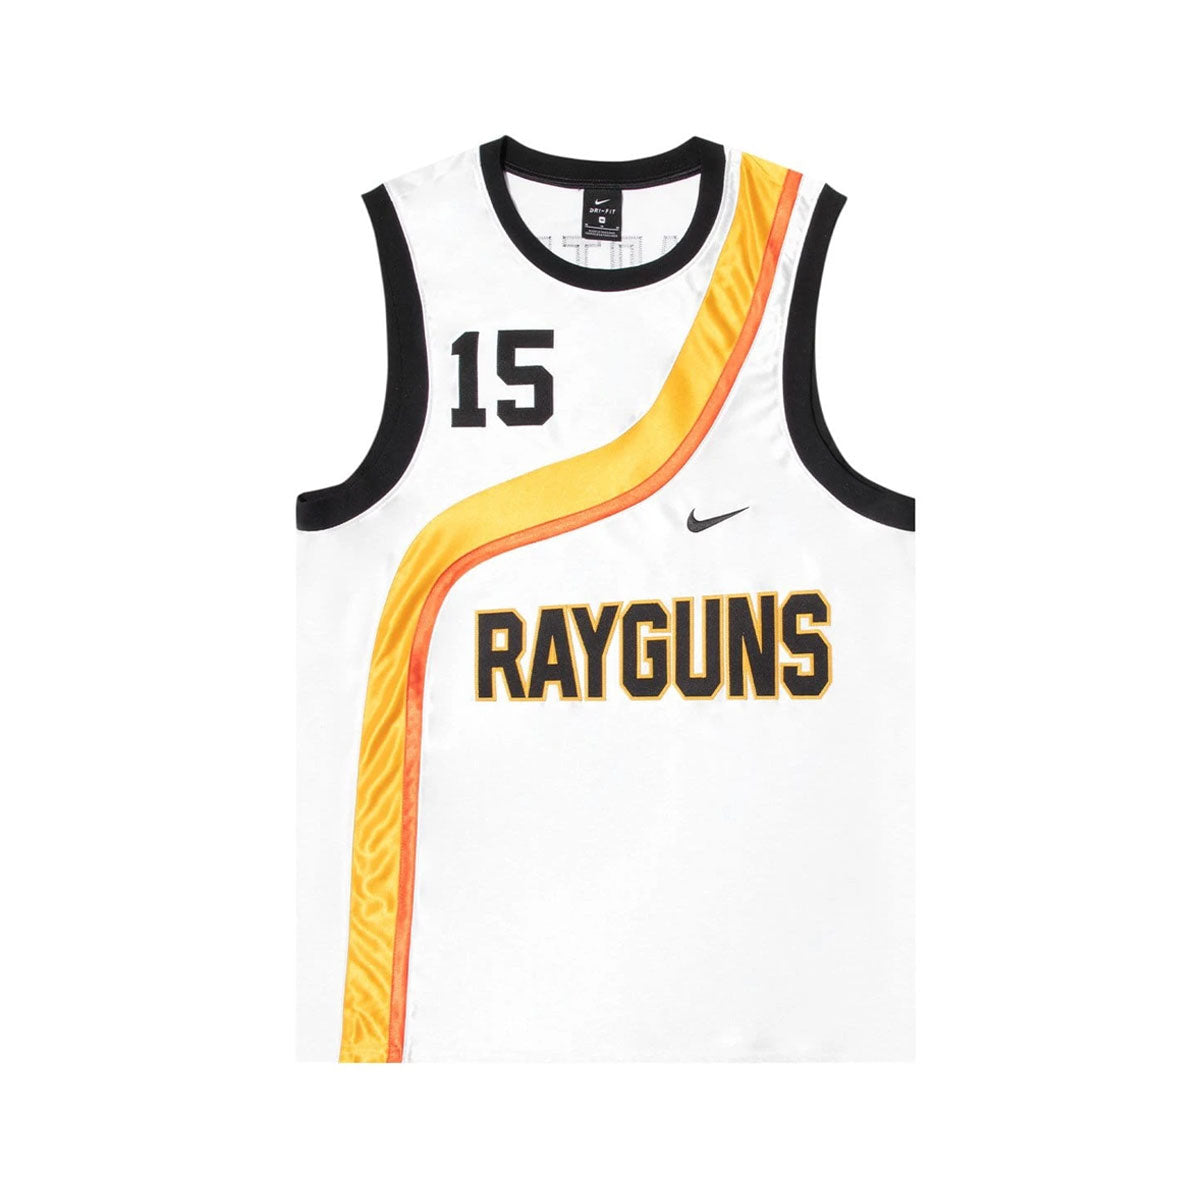 Nike Men's Rayguns Premium Basketball Jersey - KickzStore